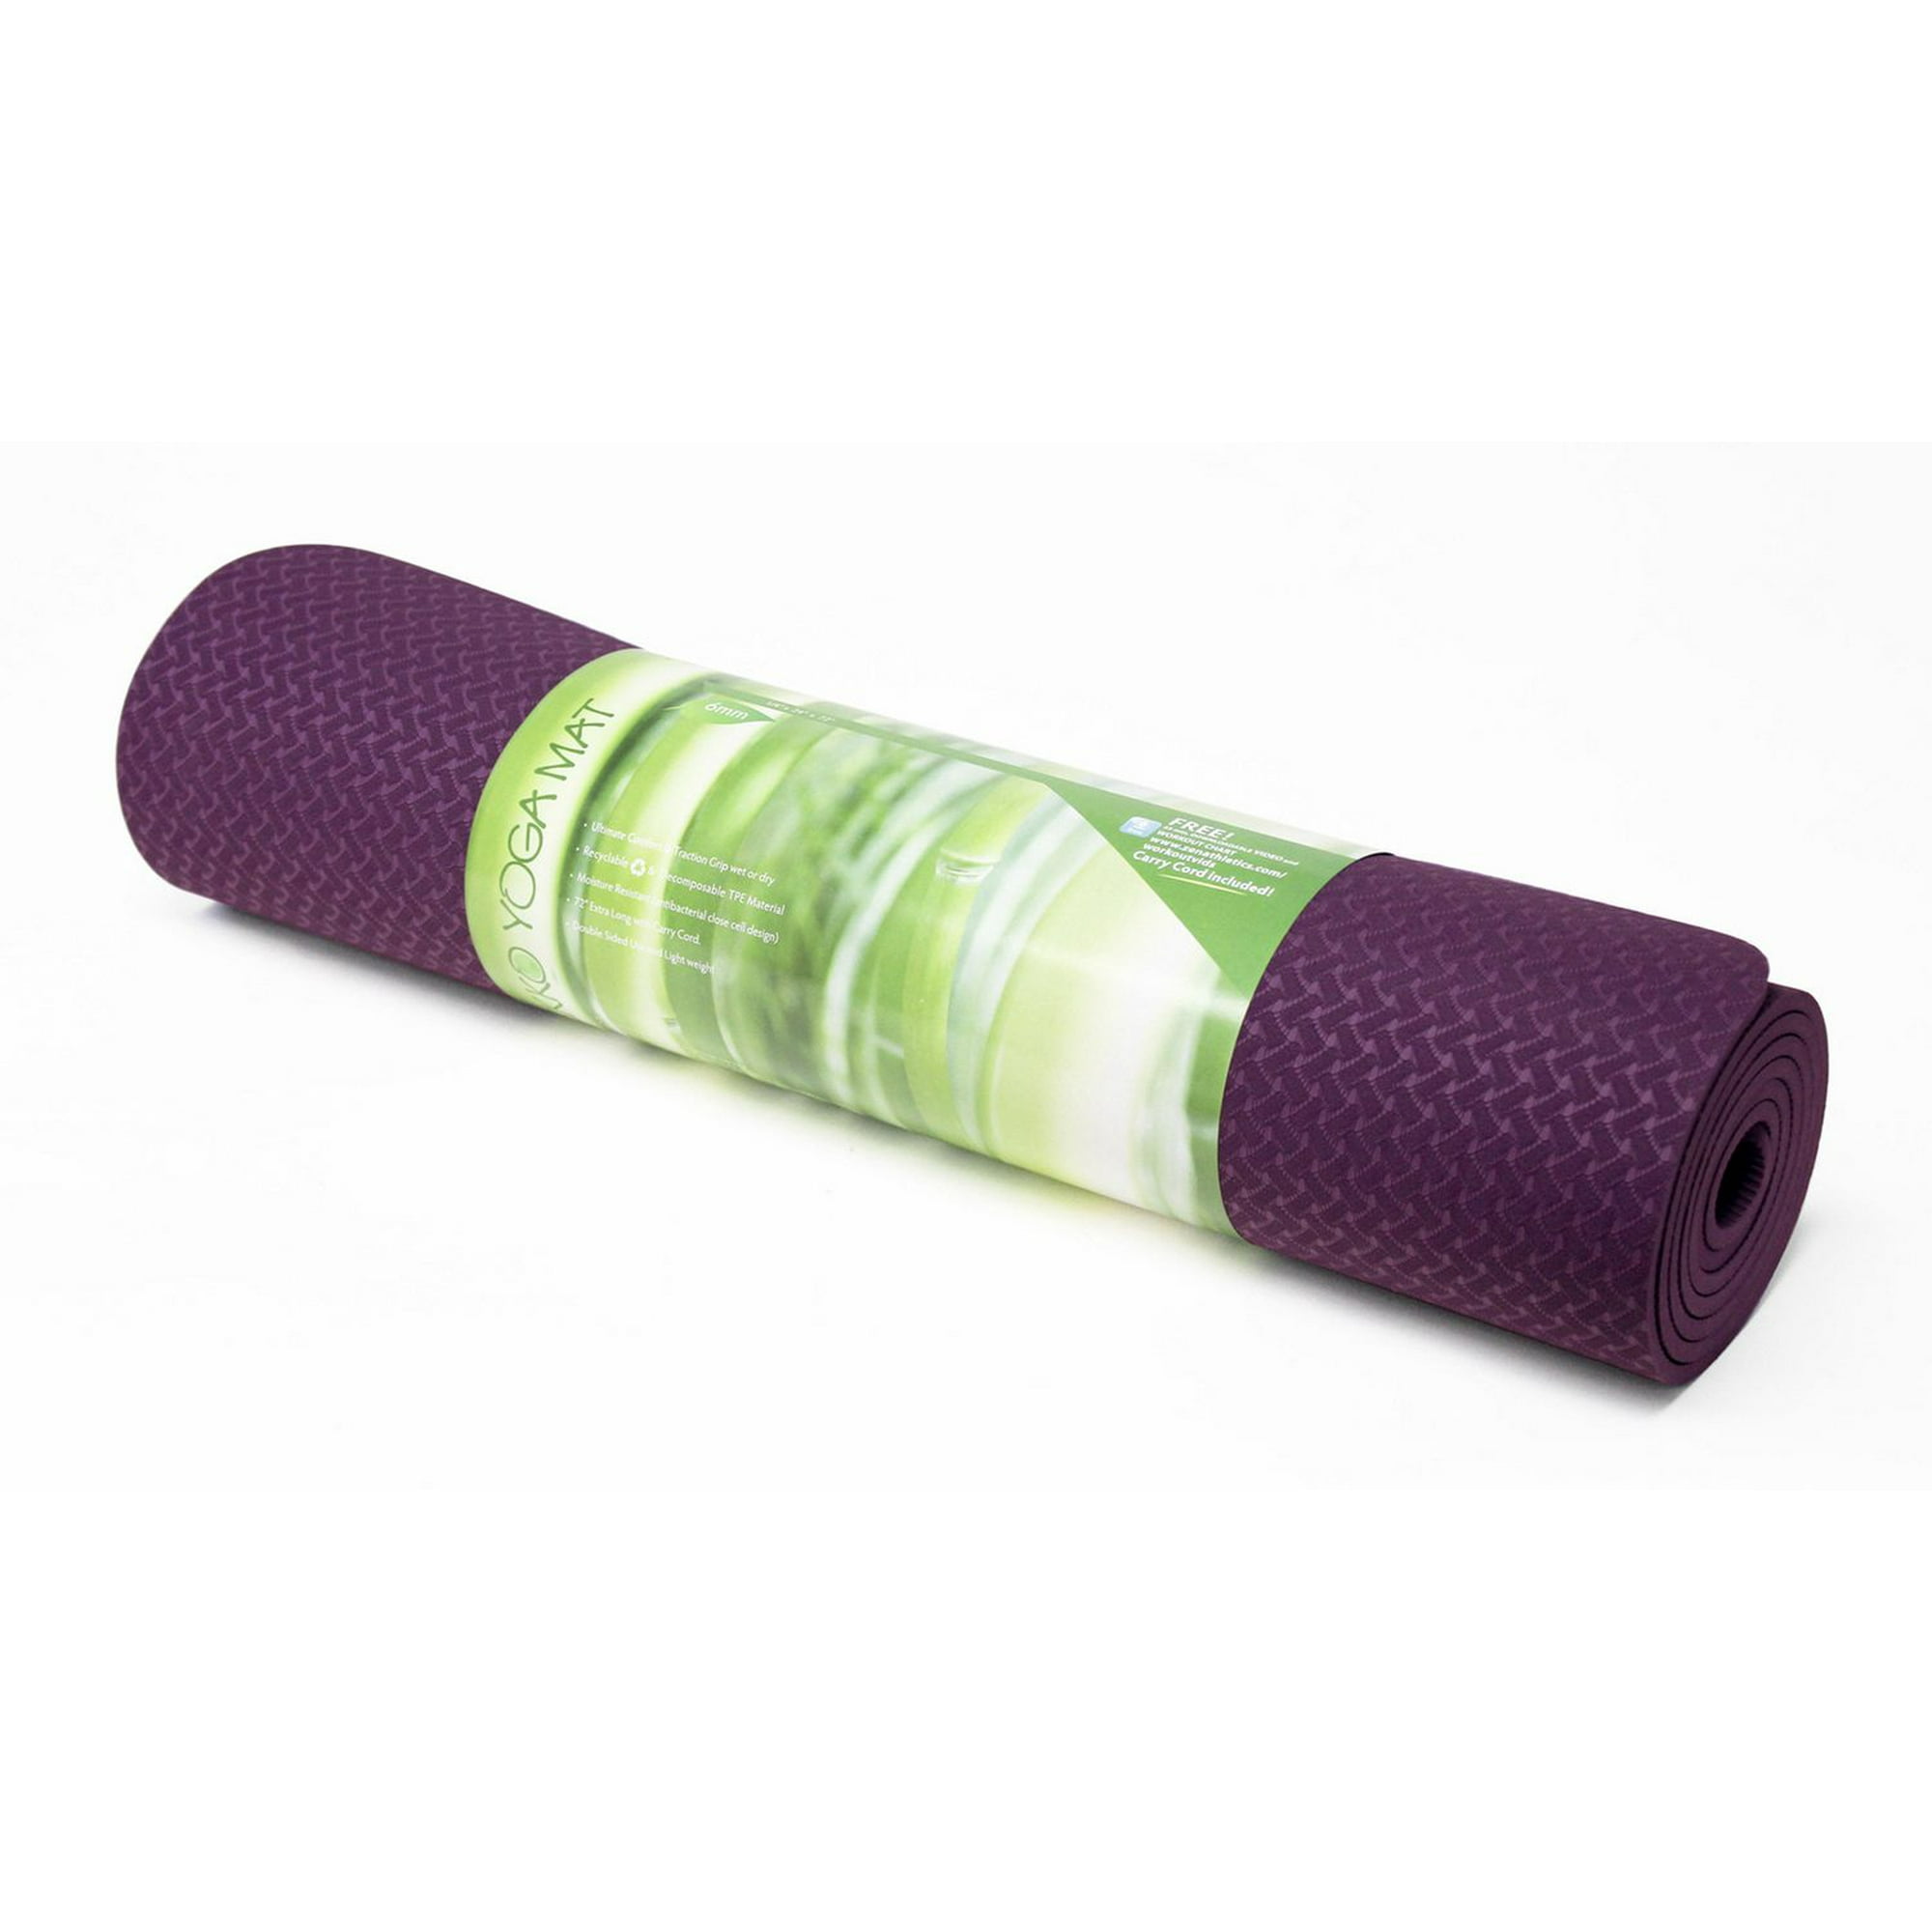 B6725 - Yoga Kit - Ecorite